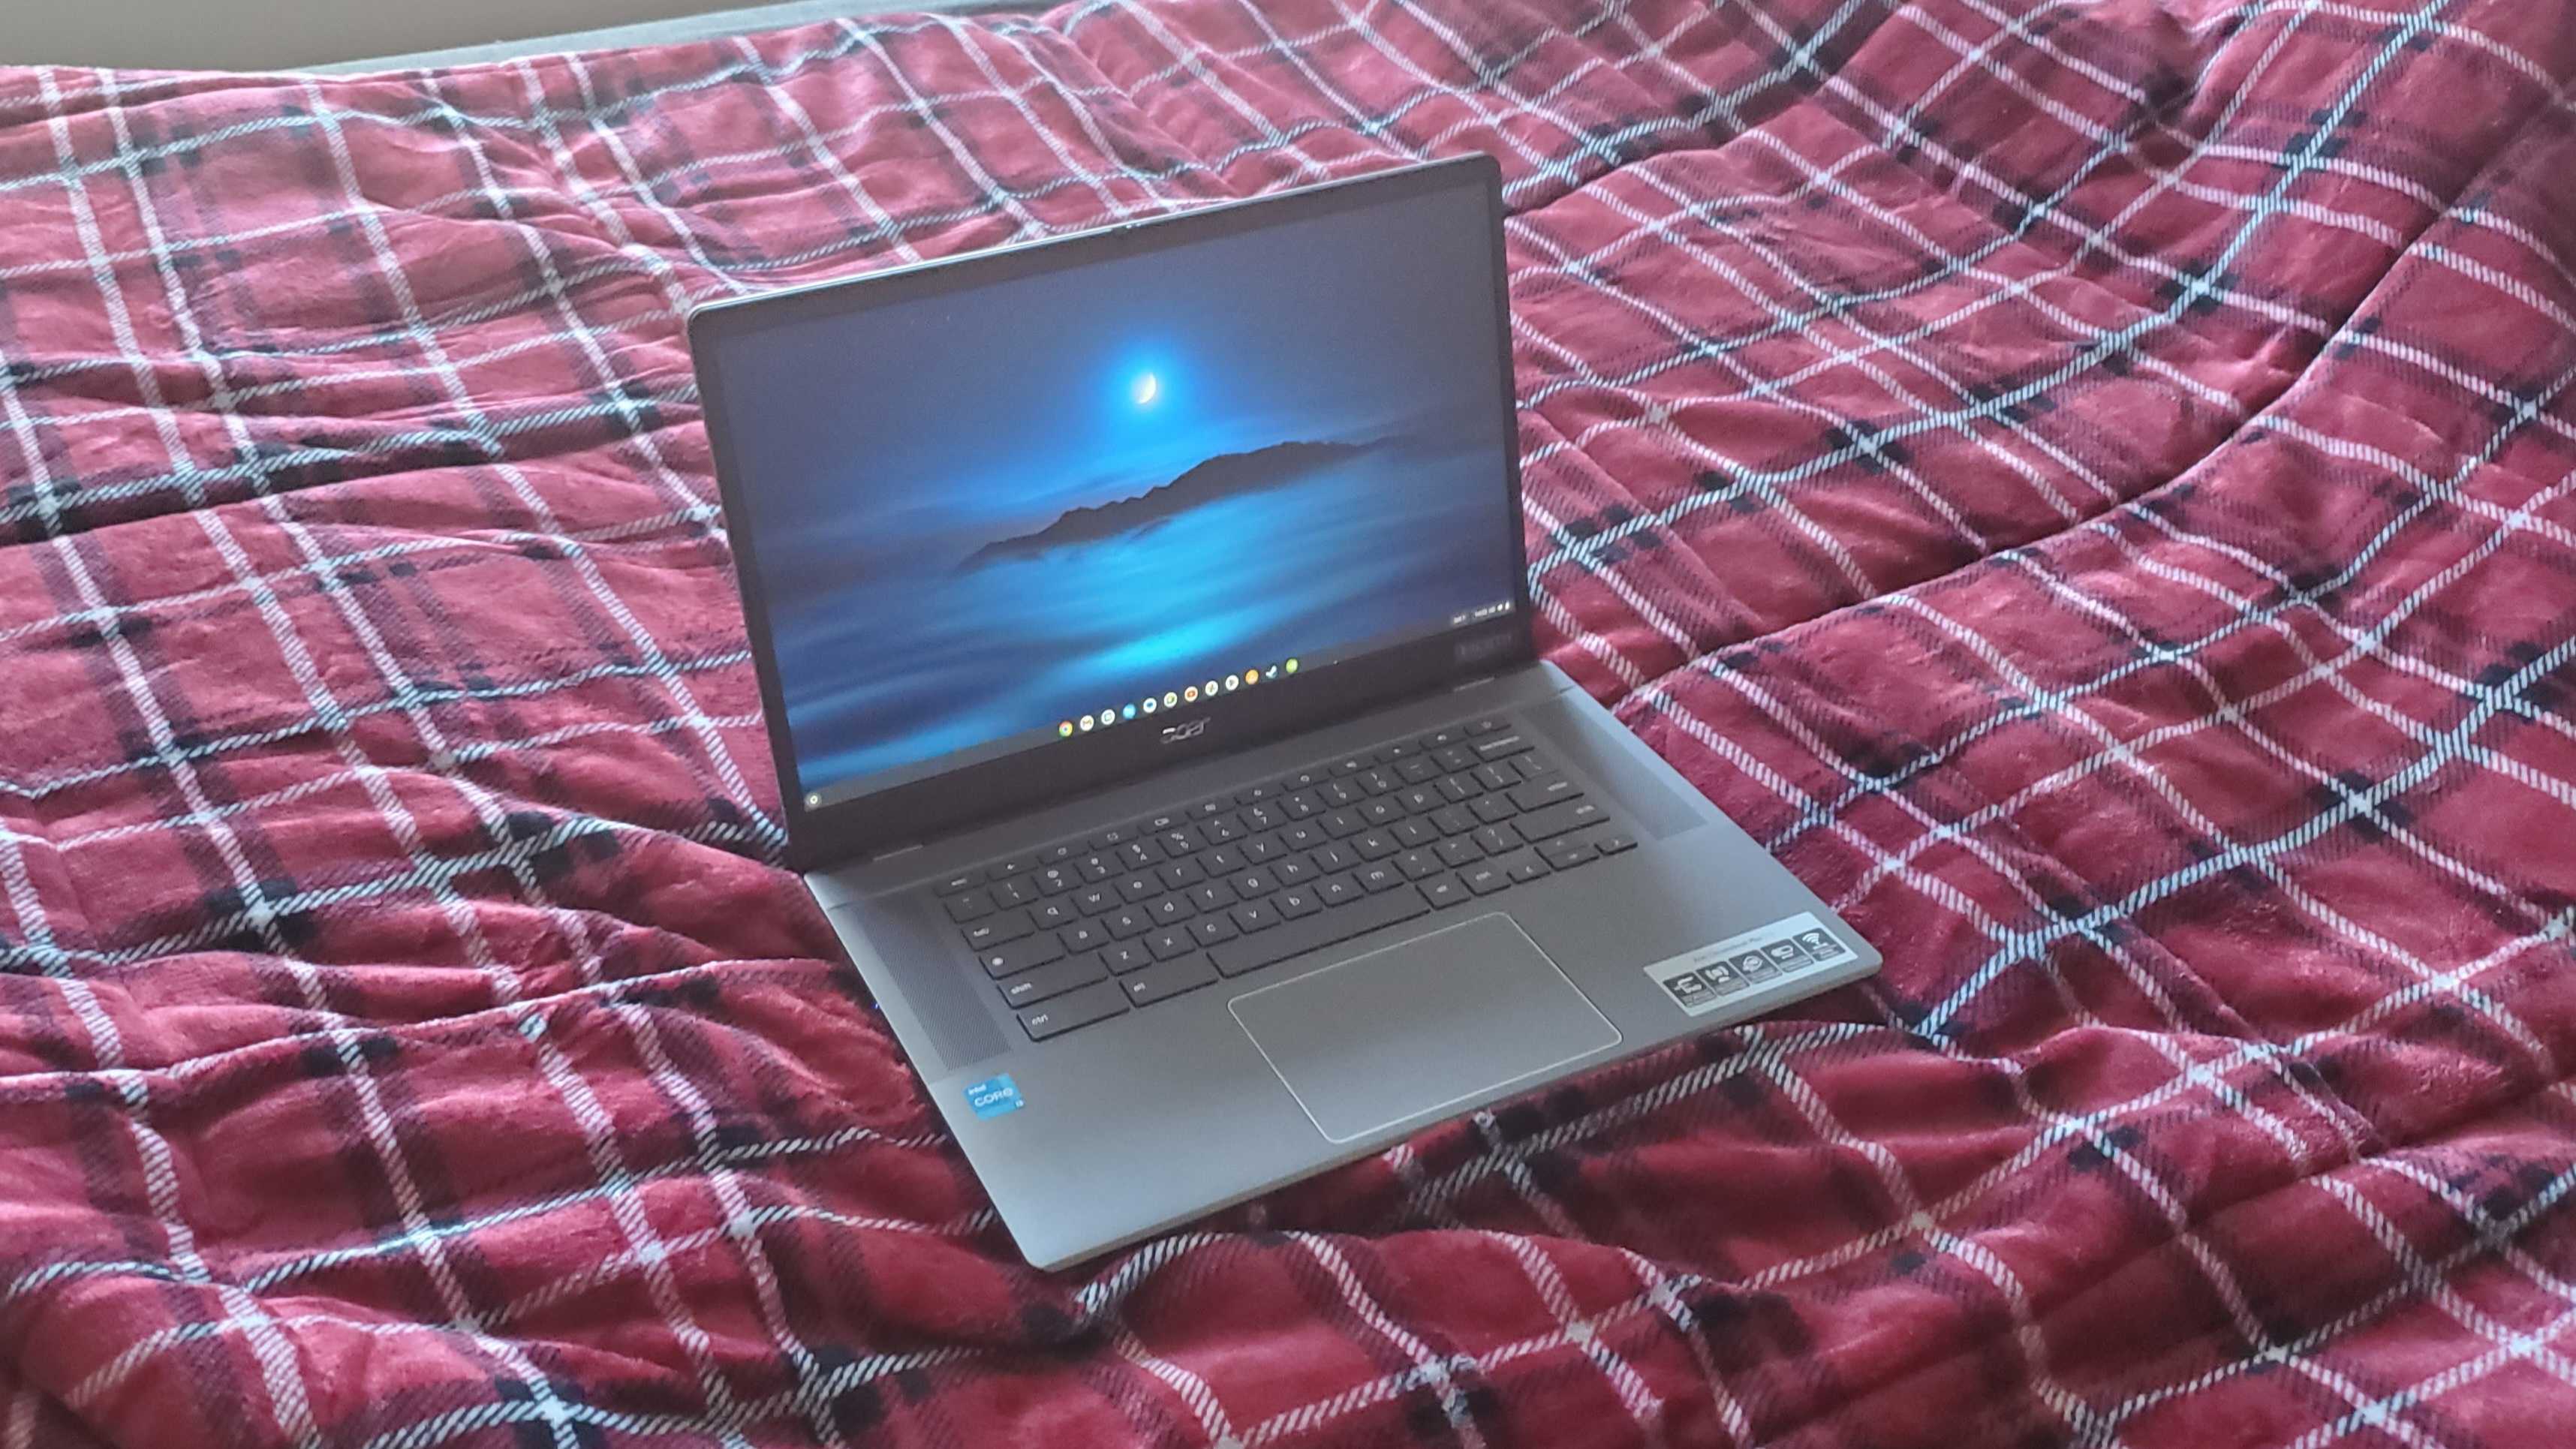 chromebook plus laptop sitting on bed